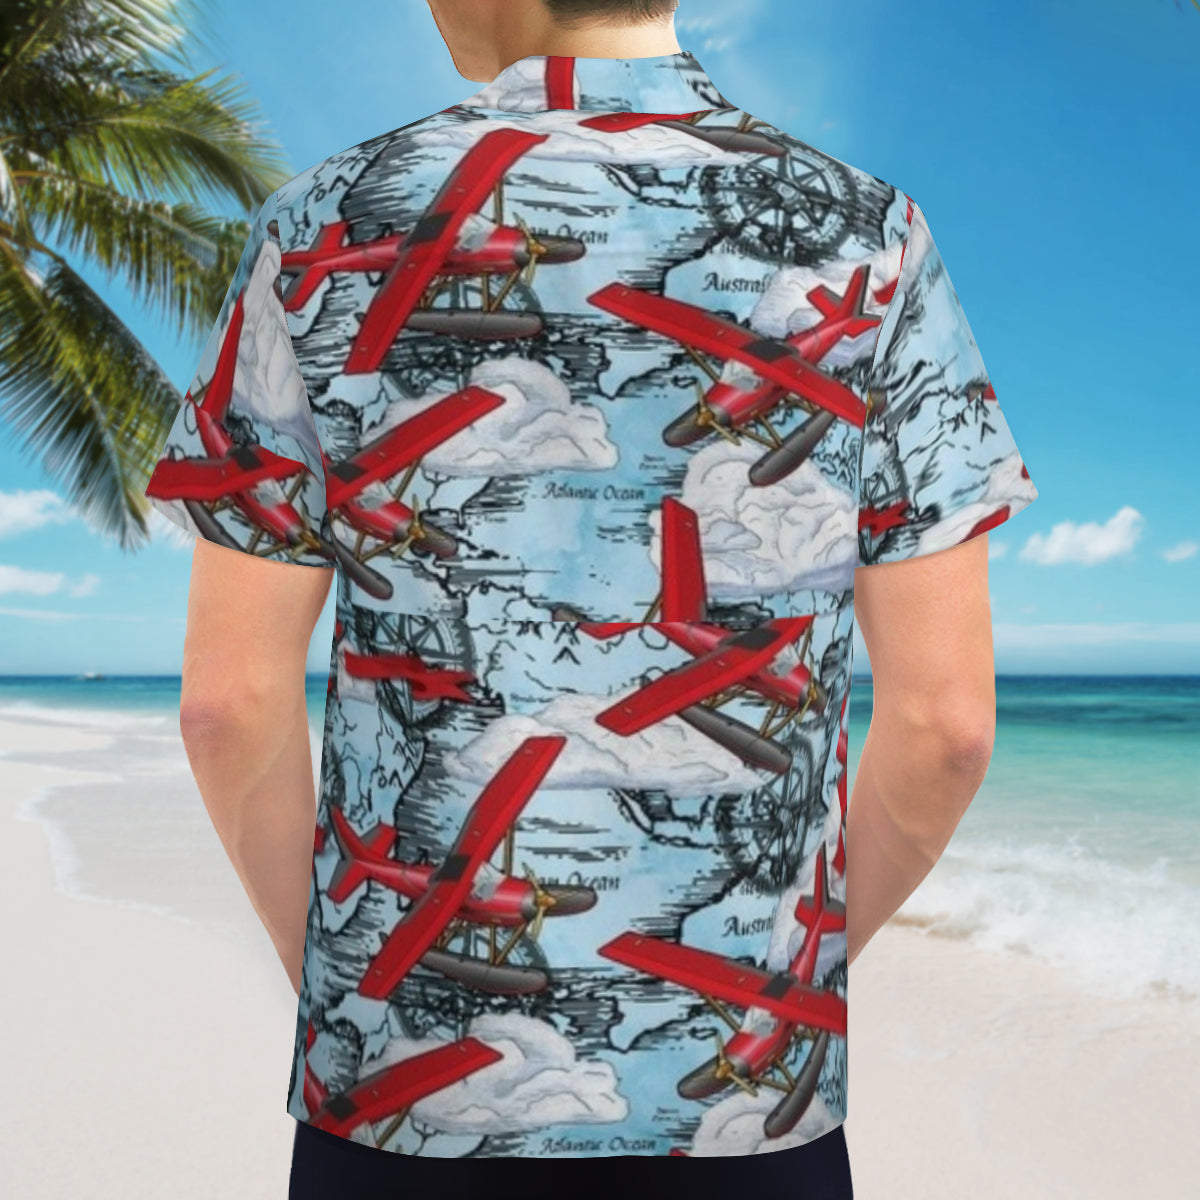 Hawaiian shirt - red planes